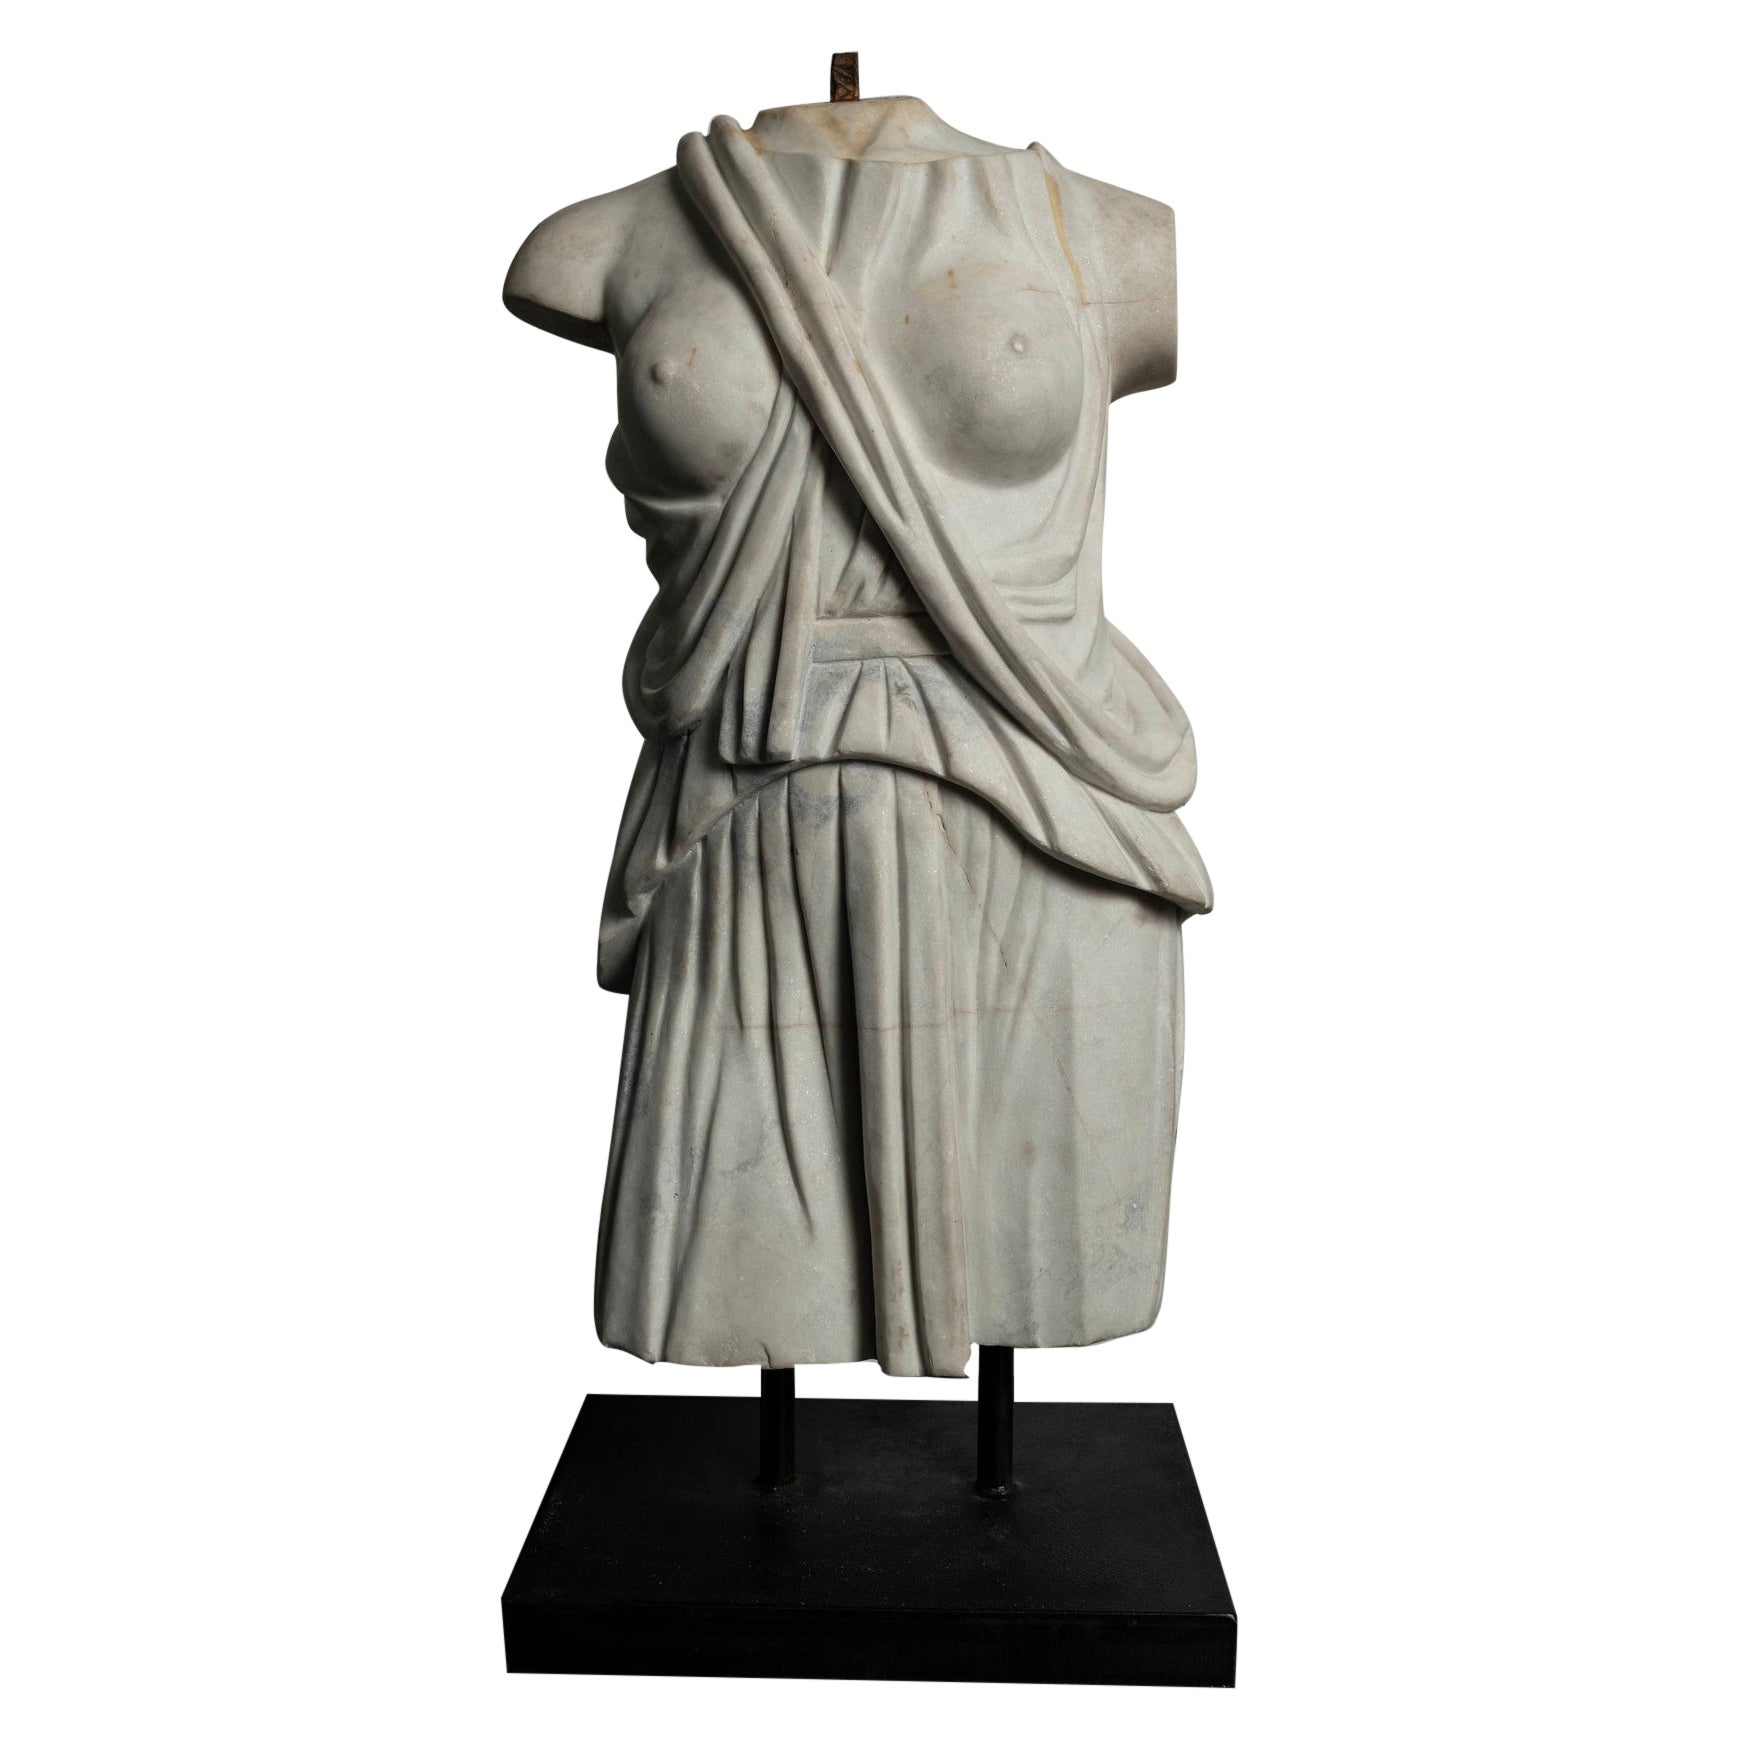 Artemis - Torse italien en marbre